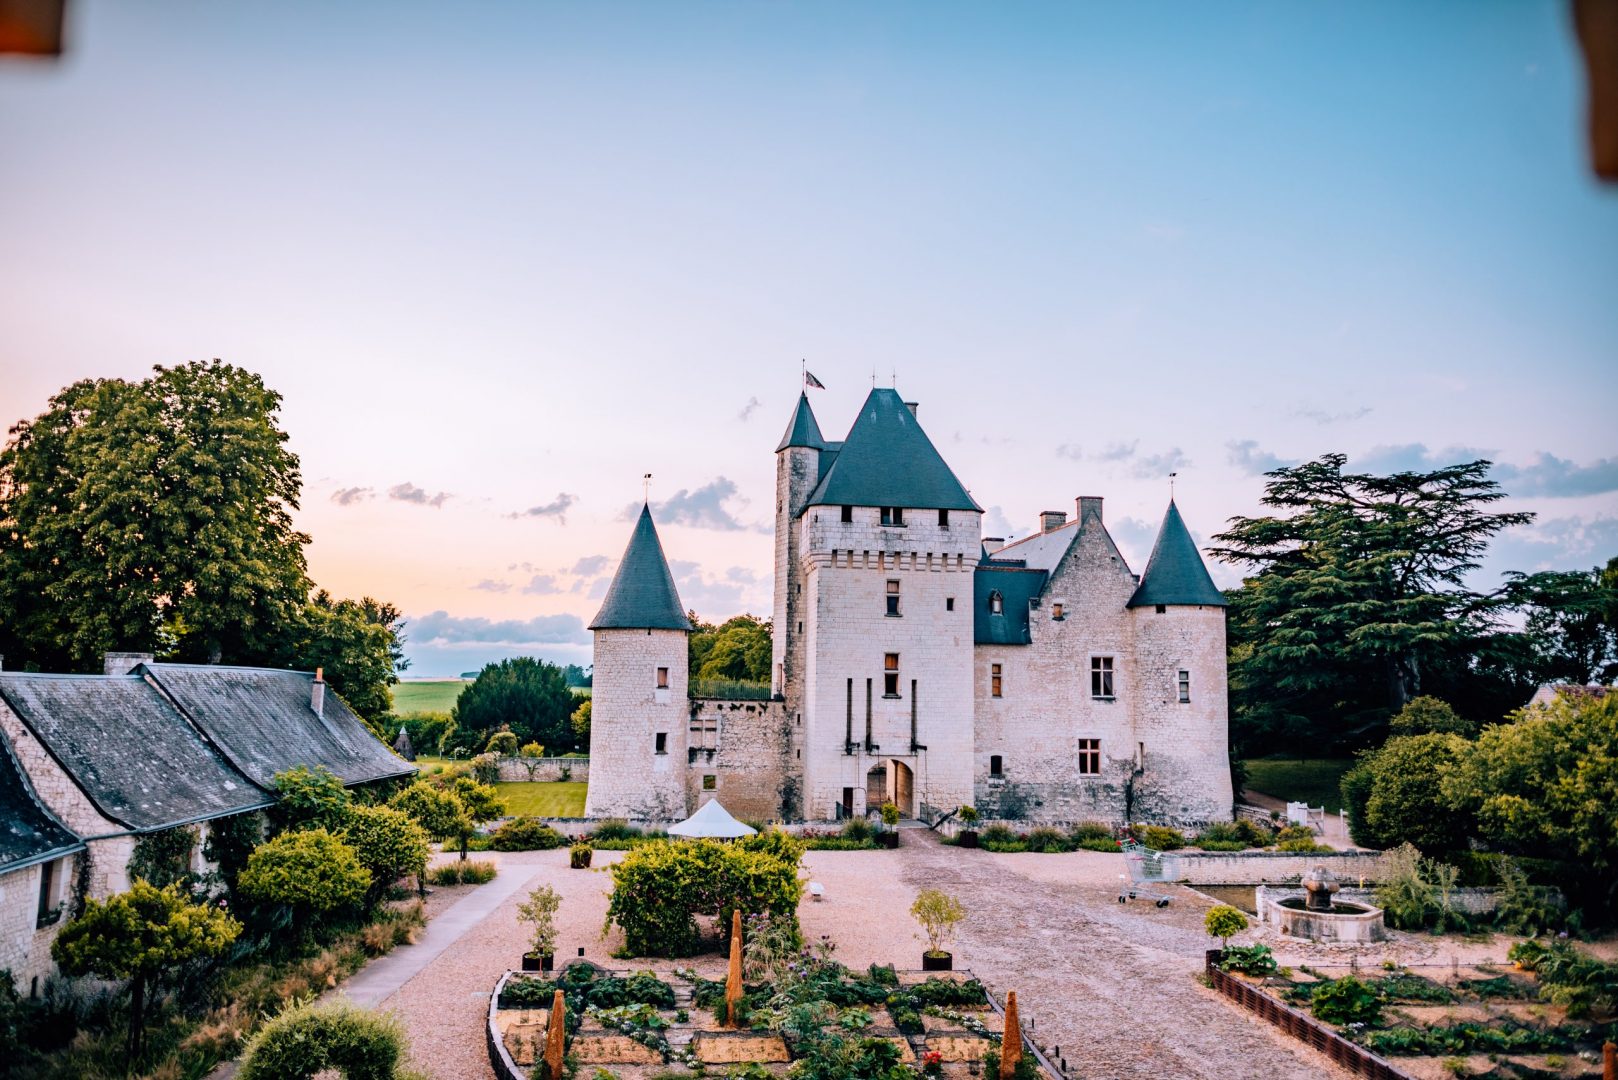 The Château du Rivau, a medieval castle in the Loire Valley